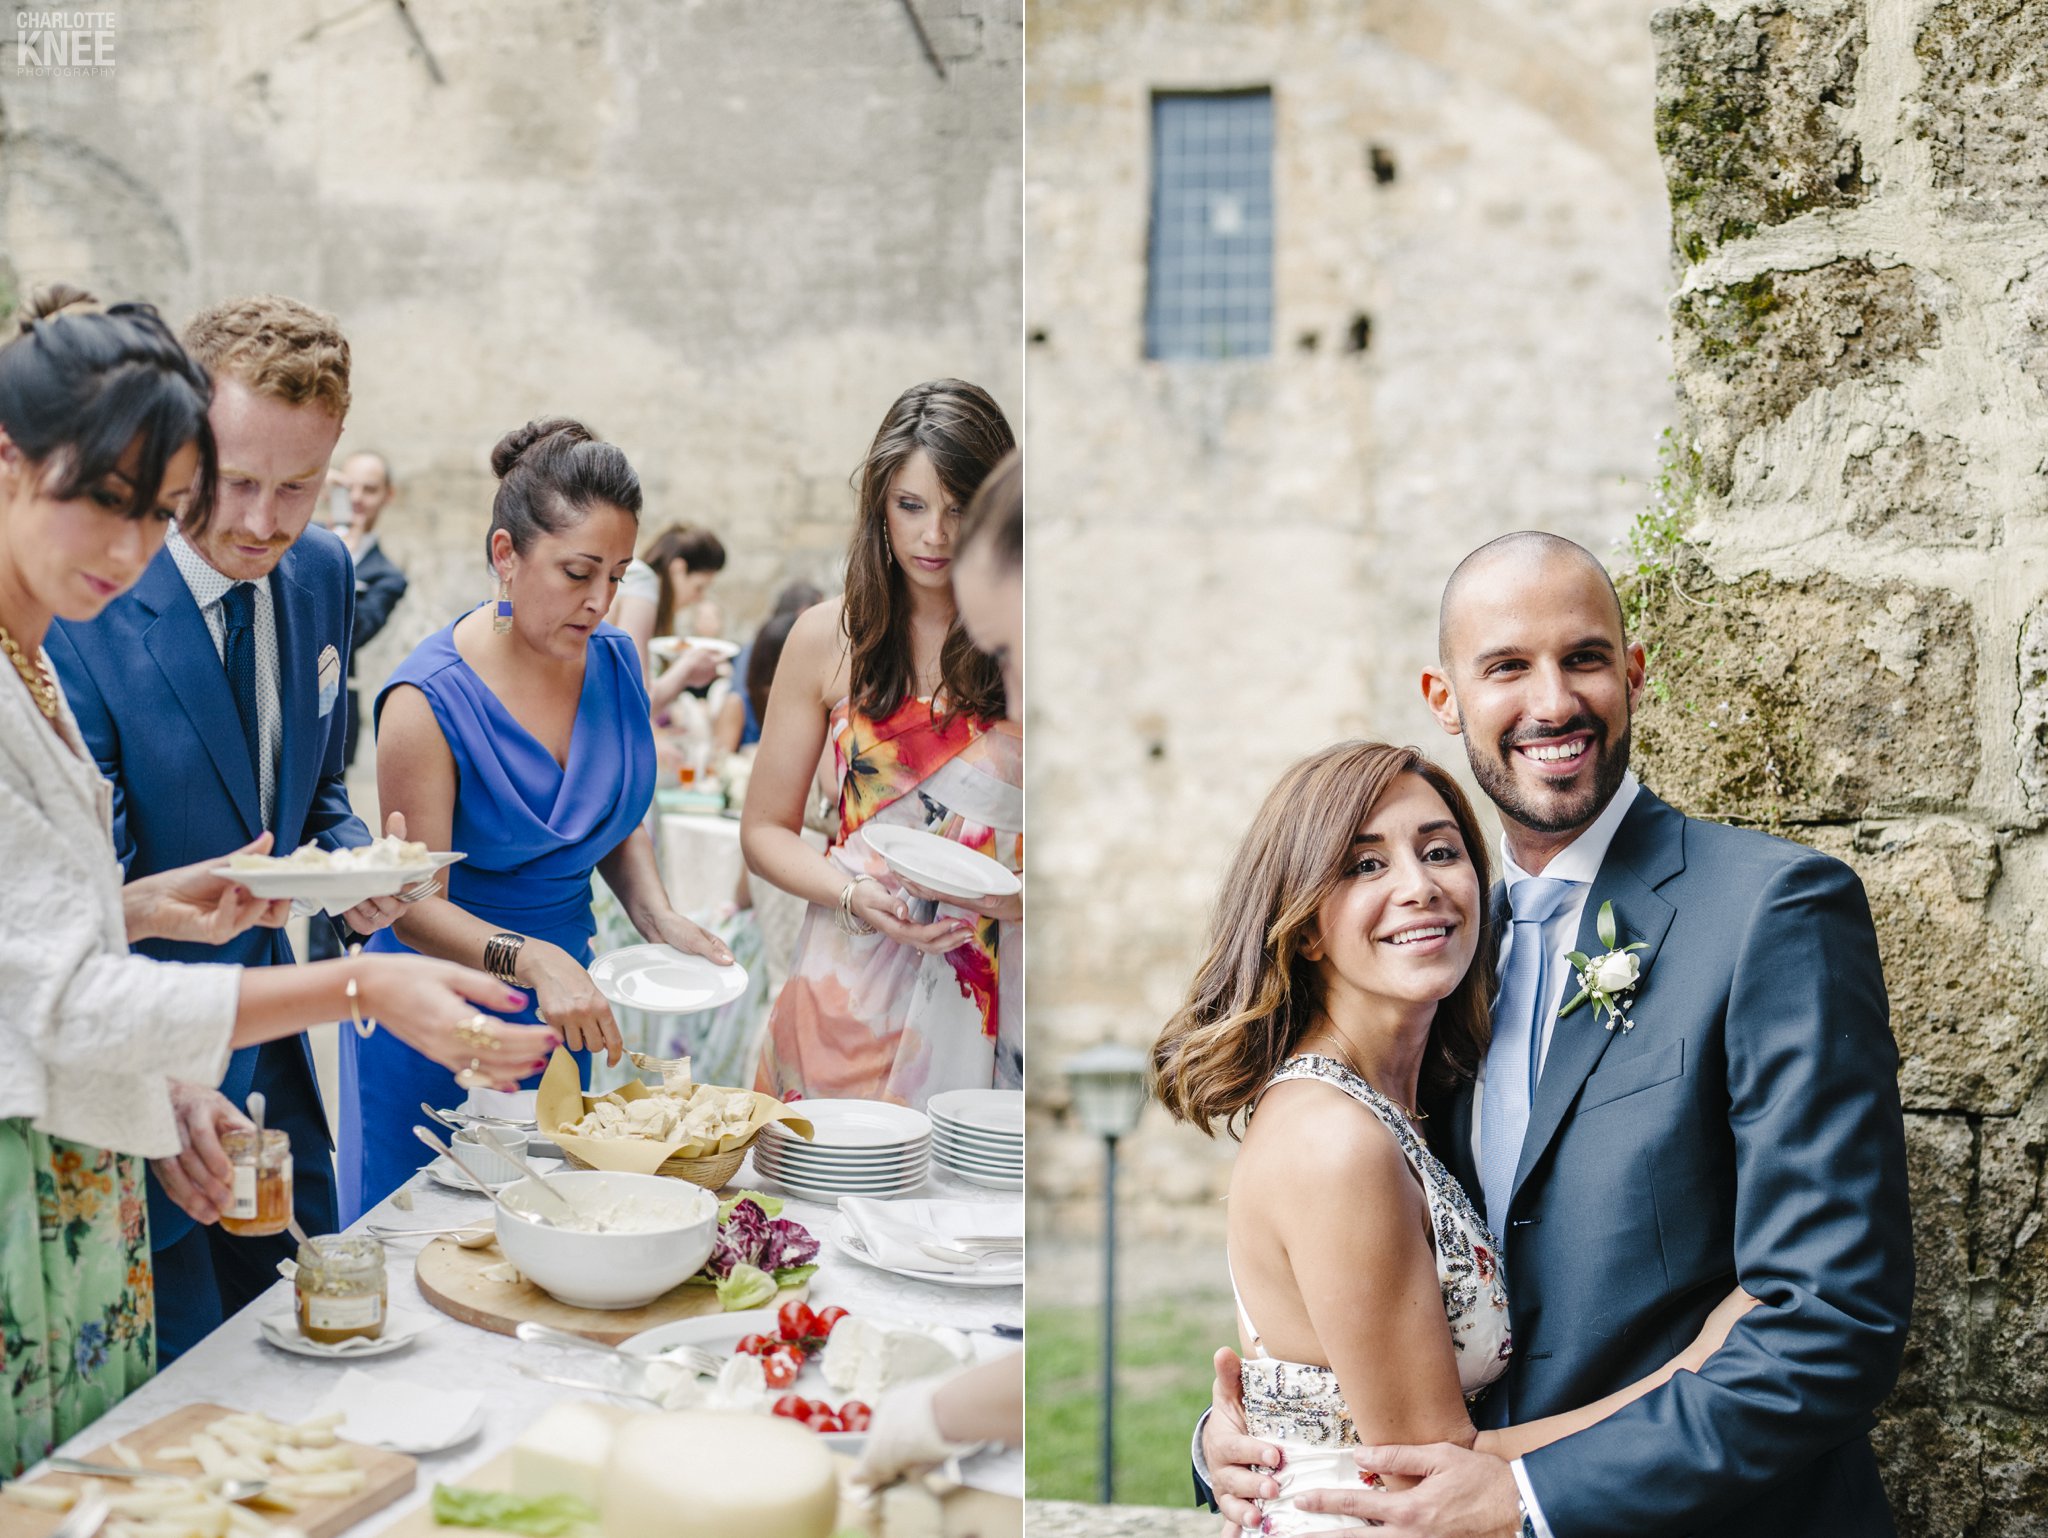 Destination-Wedding-La-Badia-di-Orvieto-Italy-Charlotte-Knee-Photography_0037.jpg